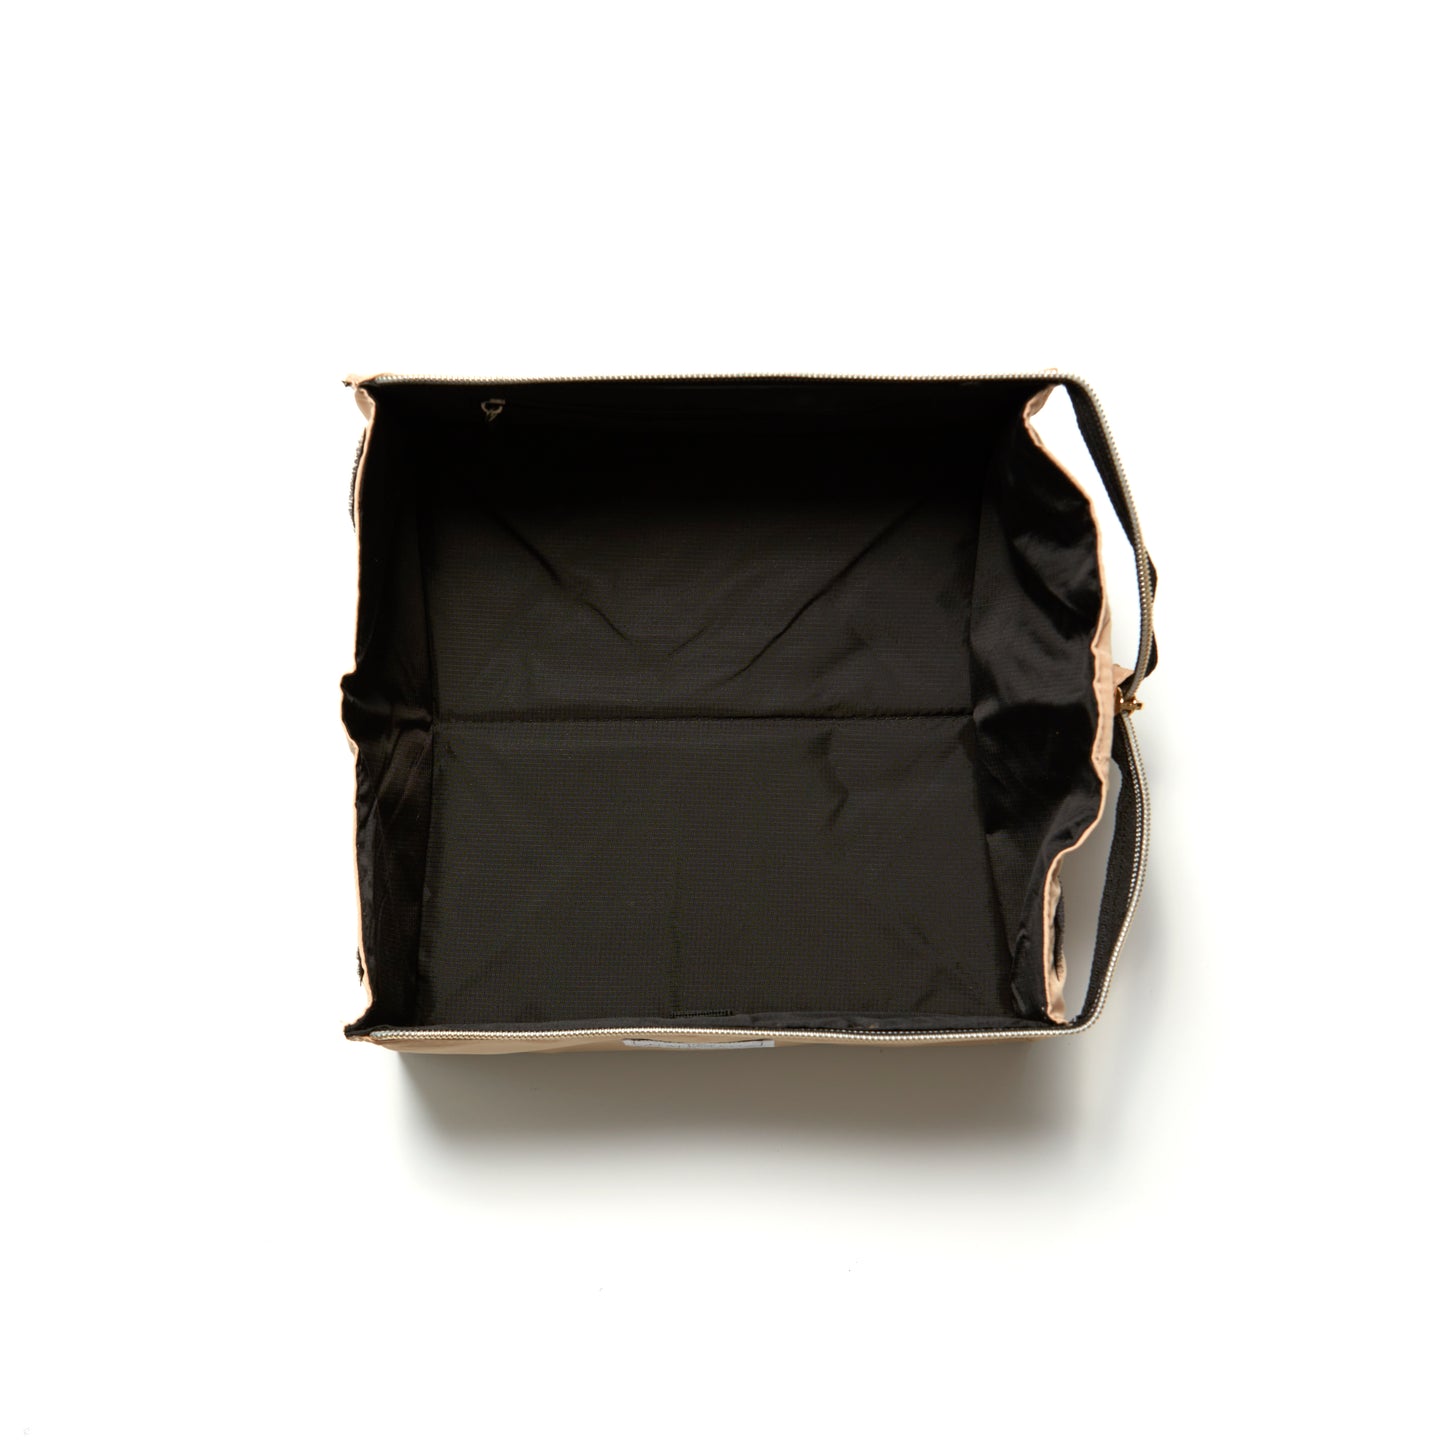 Clay Open Flat Makeup Box Bag and Tray